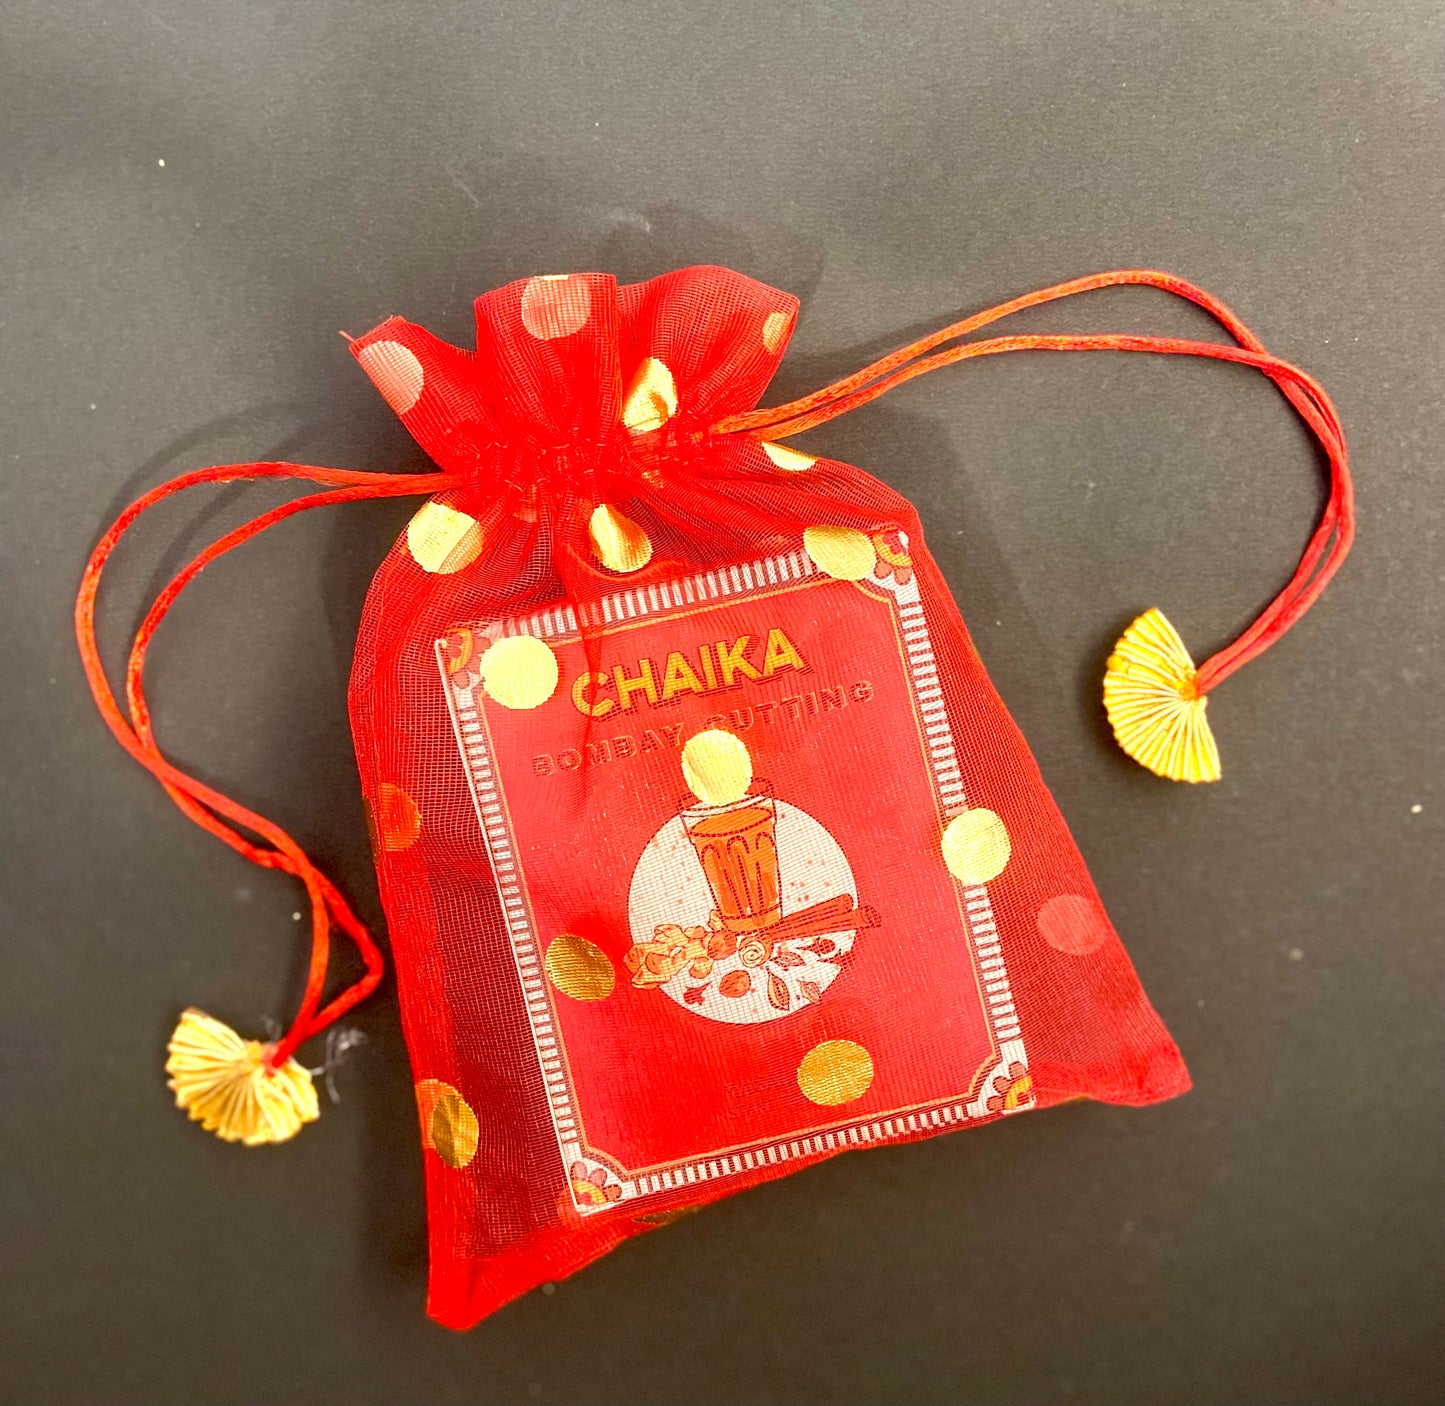 Chaika Festive Bag (1 Box)